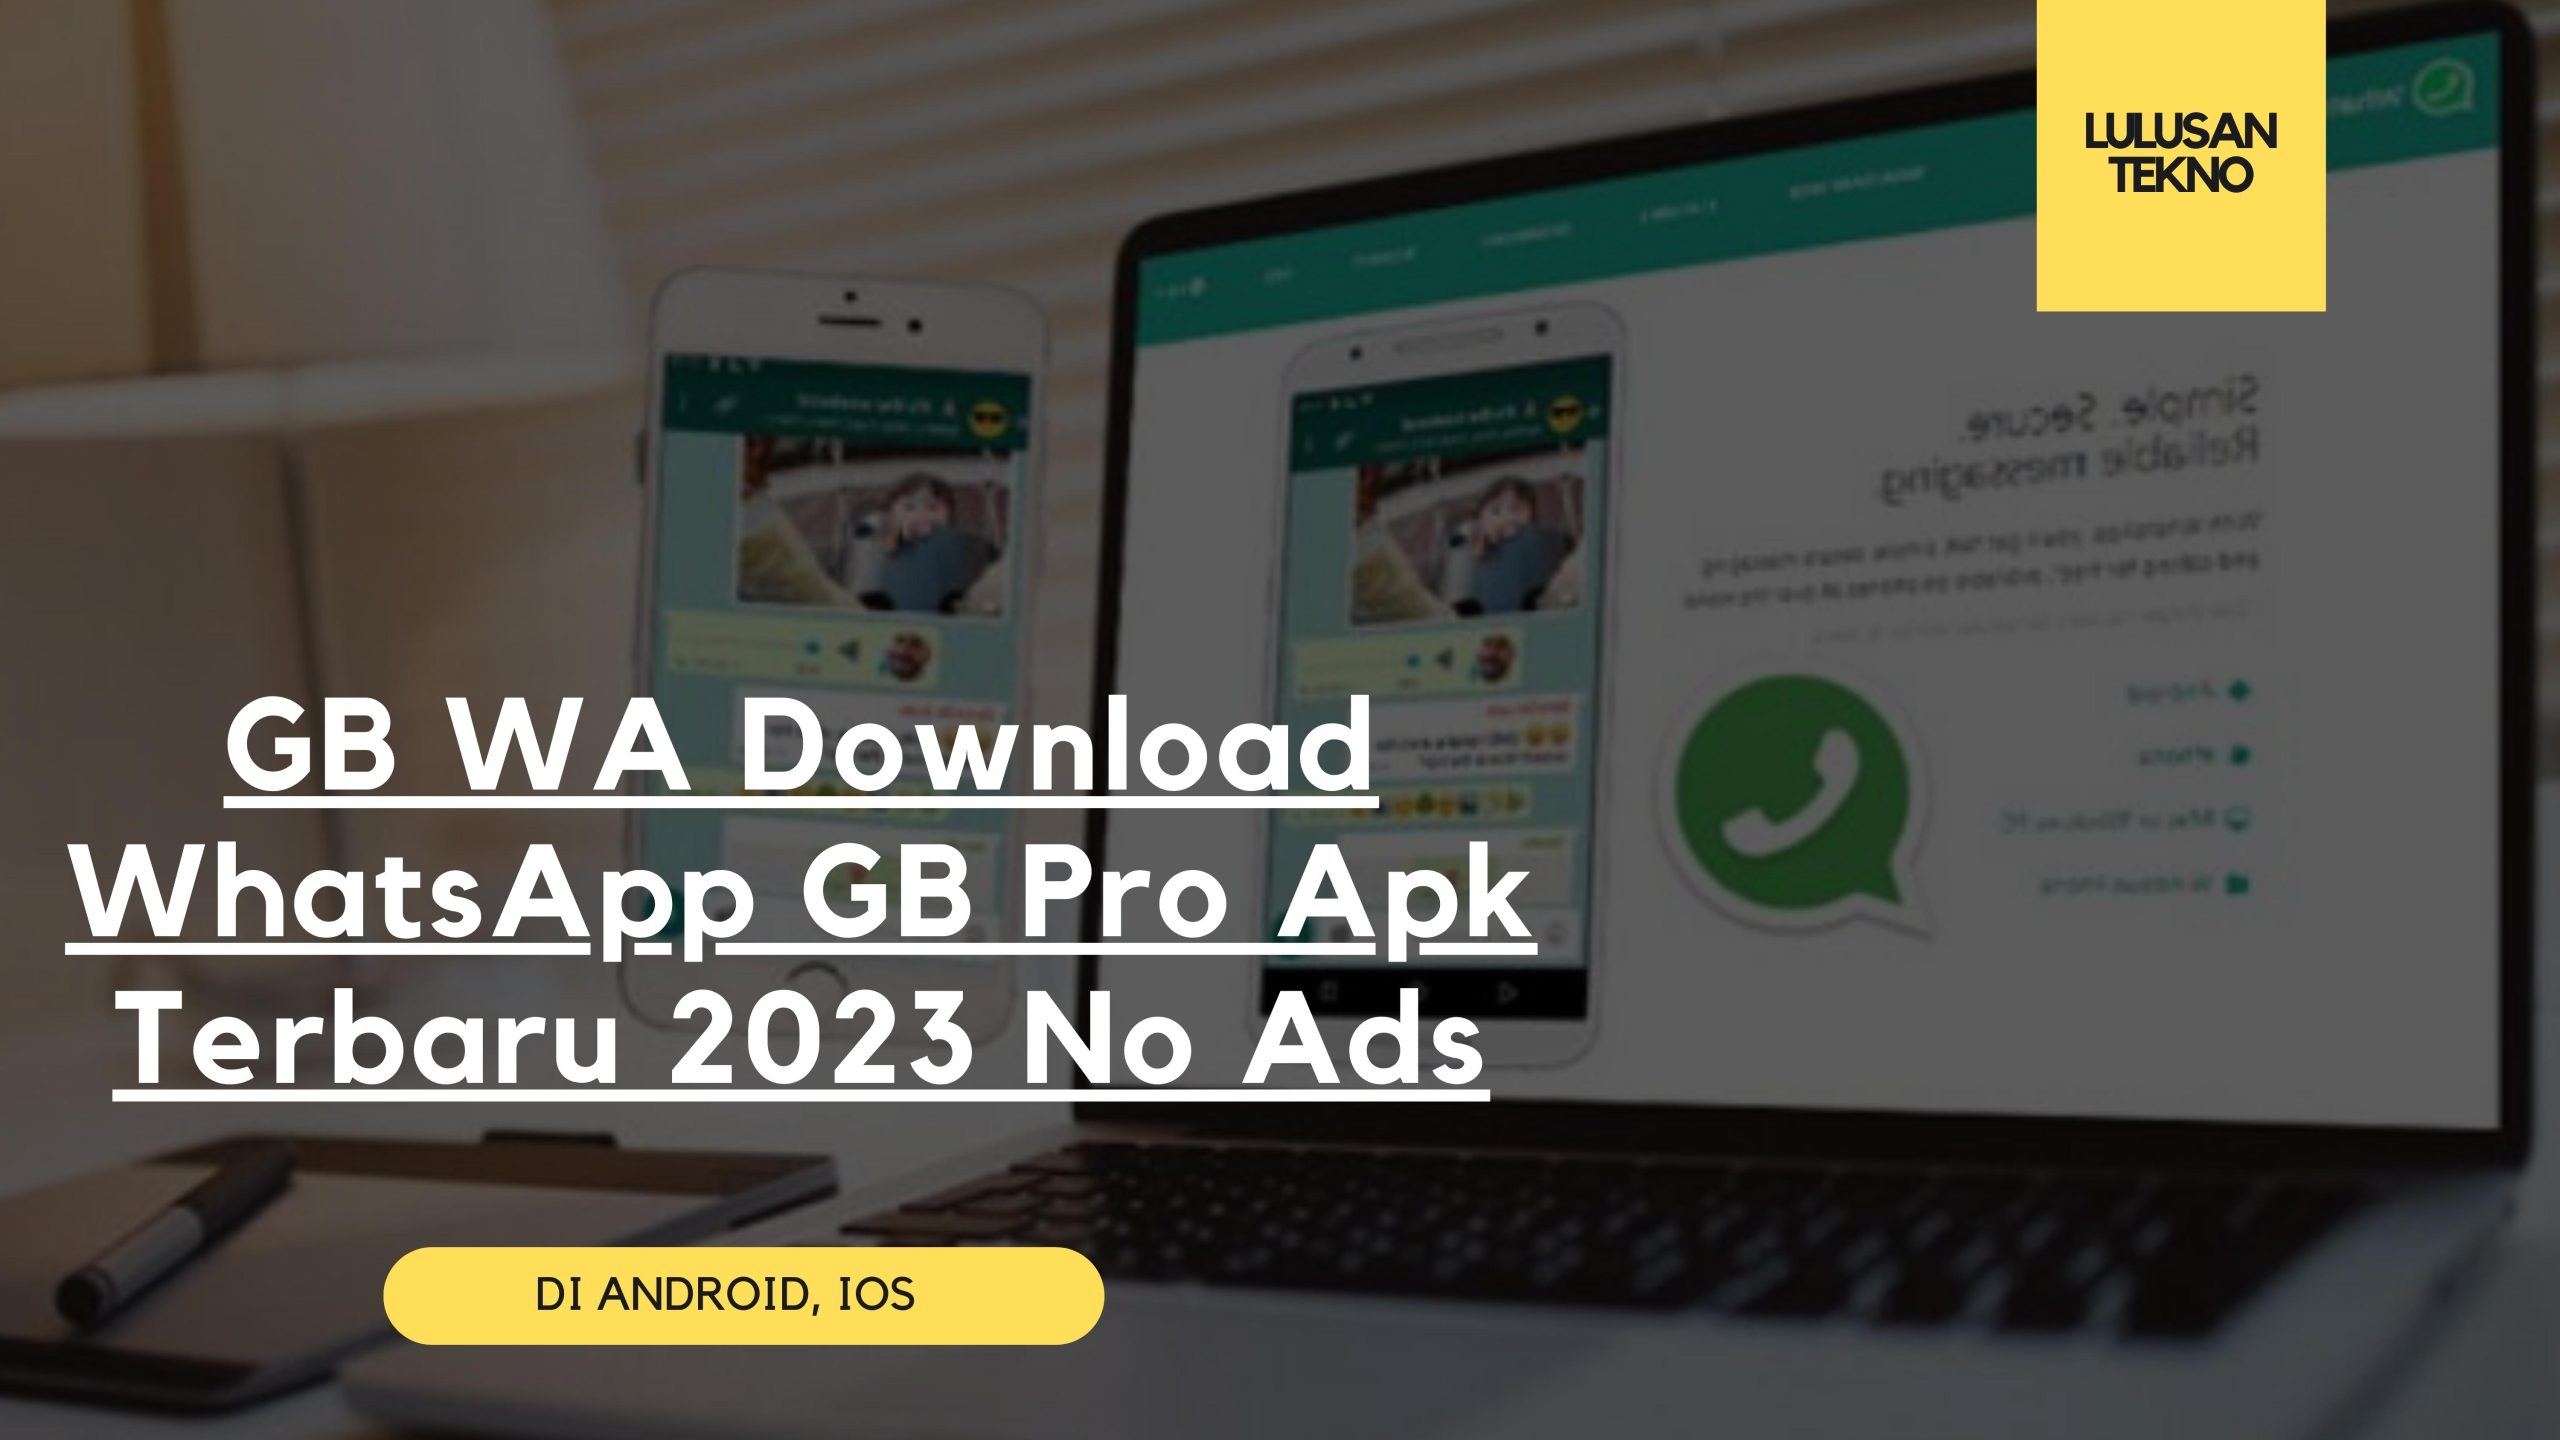 GB WA Download WhatsApp GB Pro Apk Terbaru 2023 No Ads